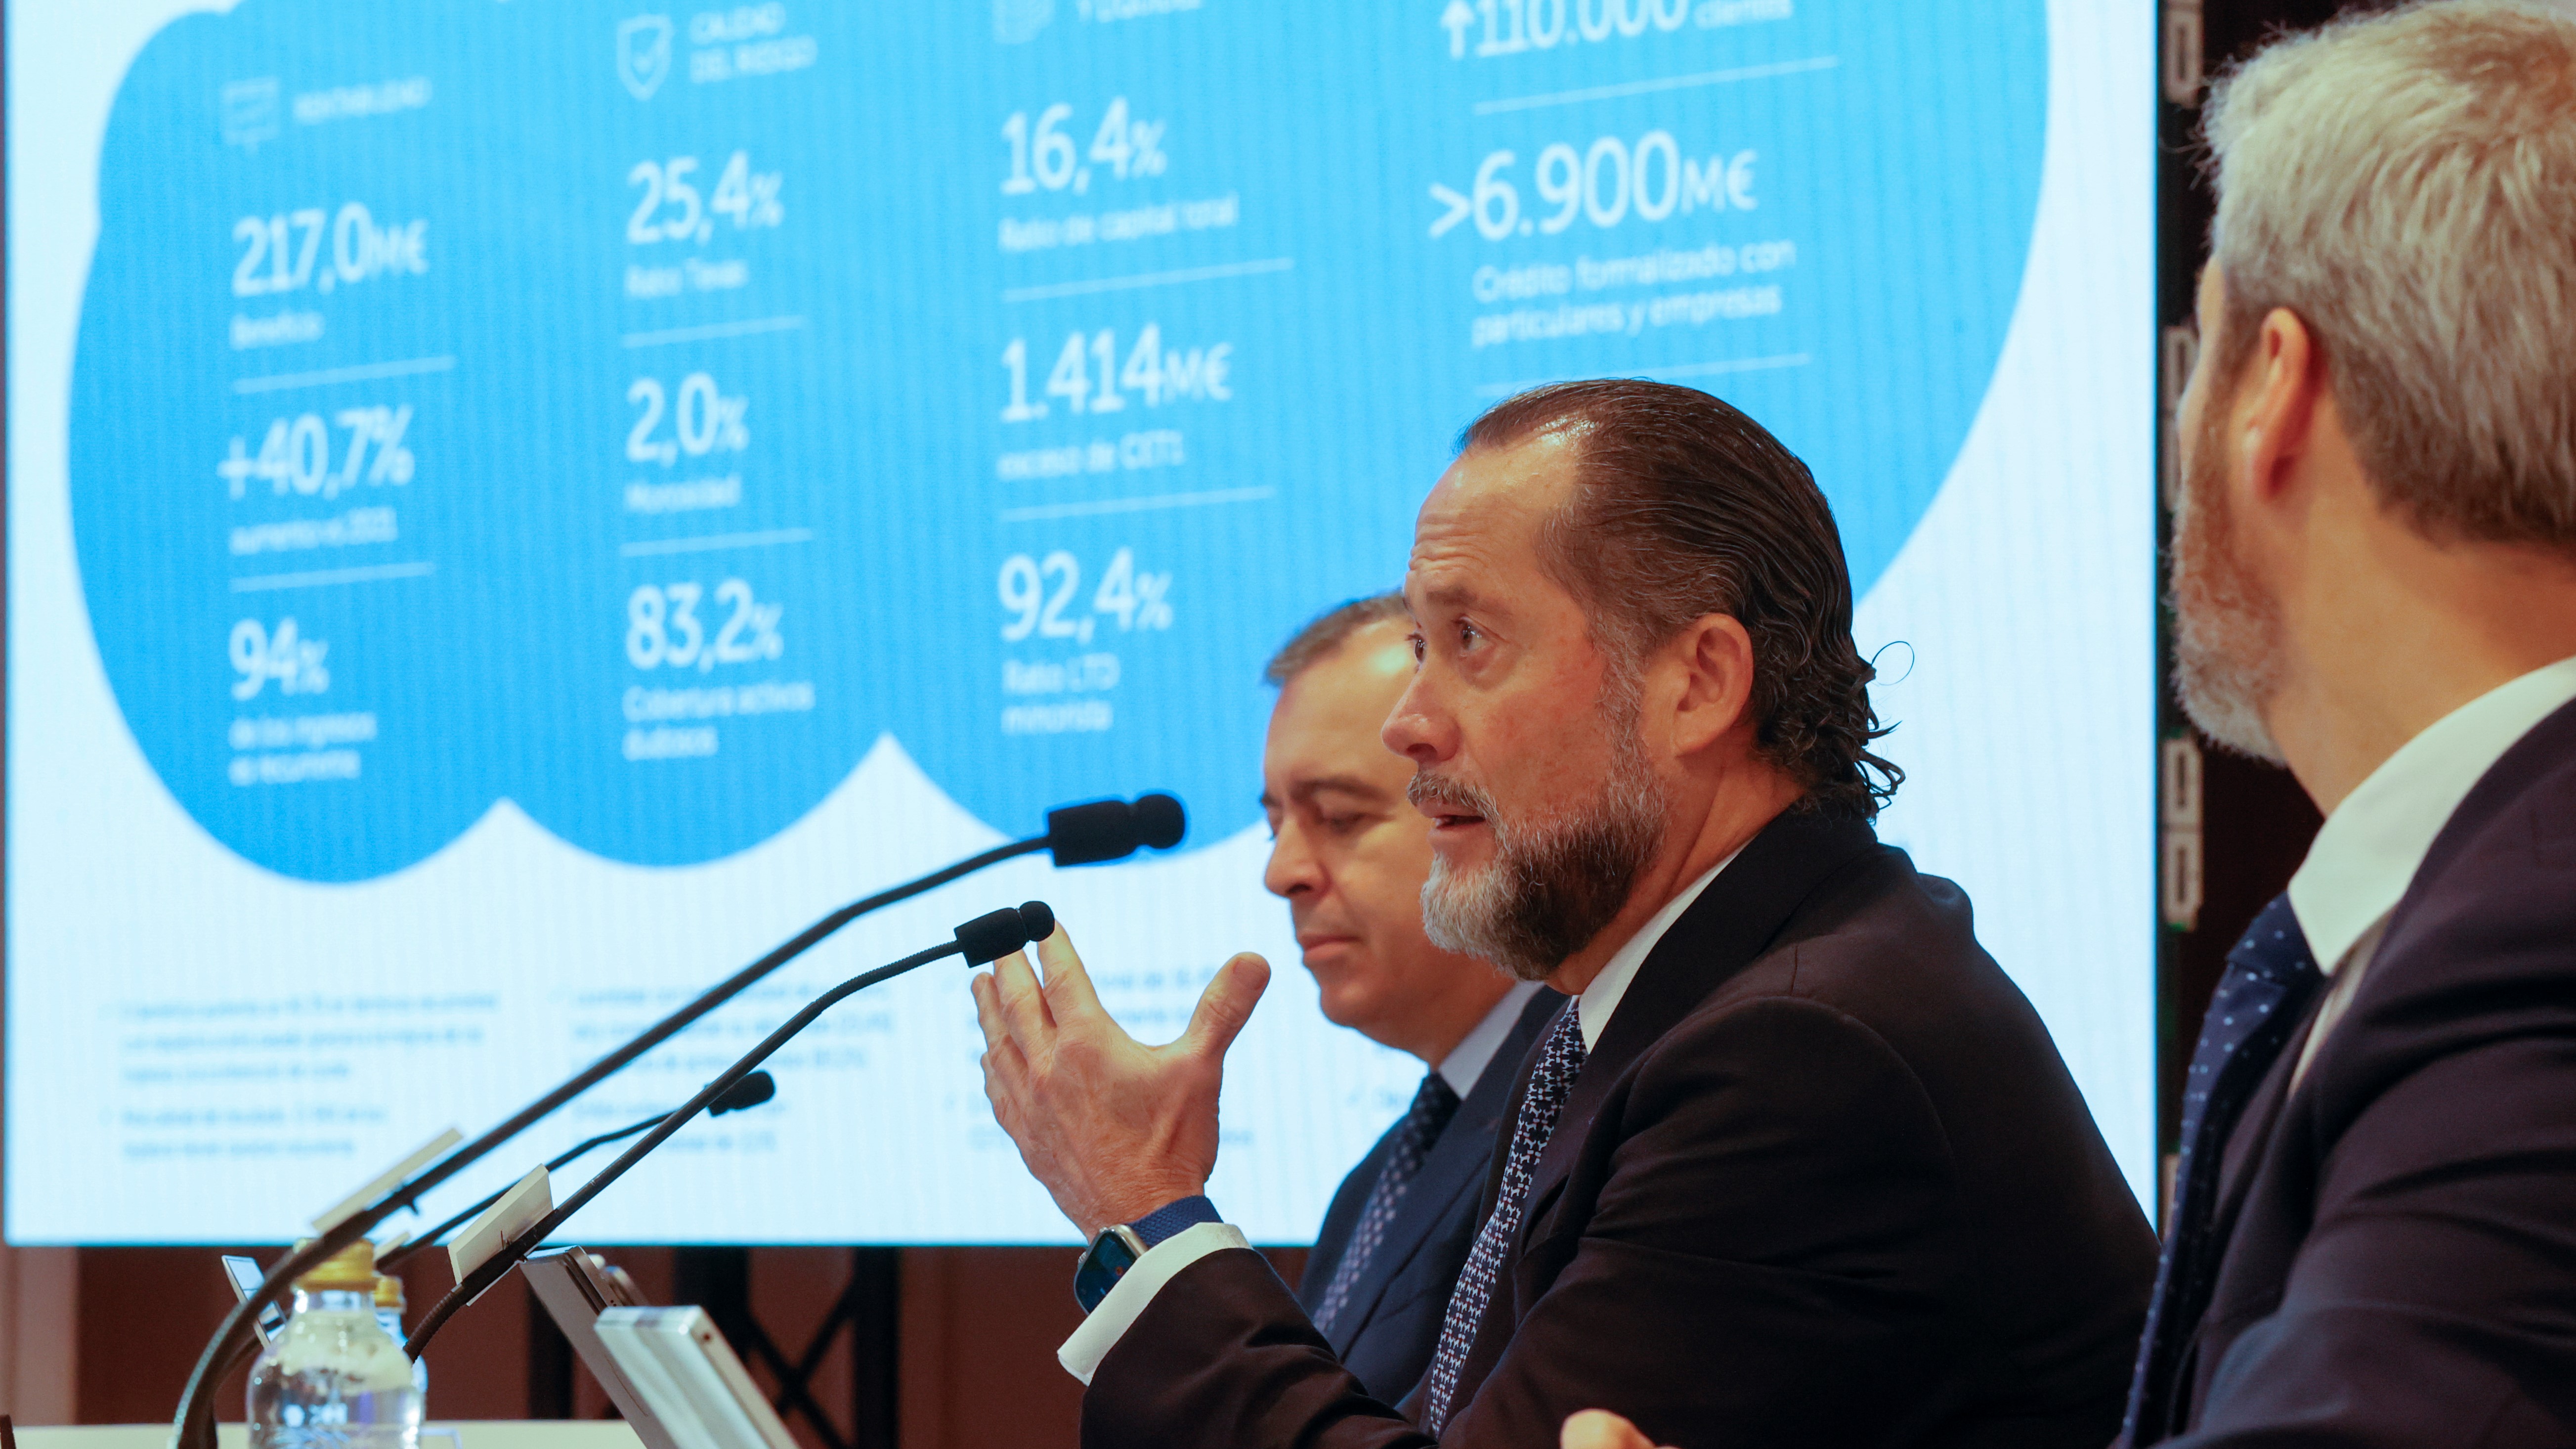 Juan Carlos Escotet, presidente de Abanca, presenta os resultados da entidade (EFE/Lavandeira jr)